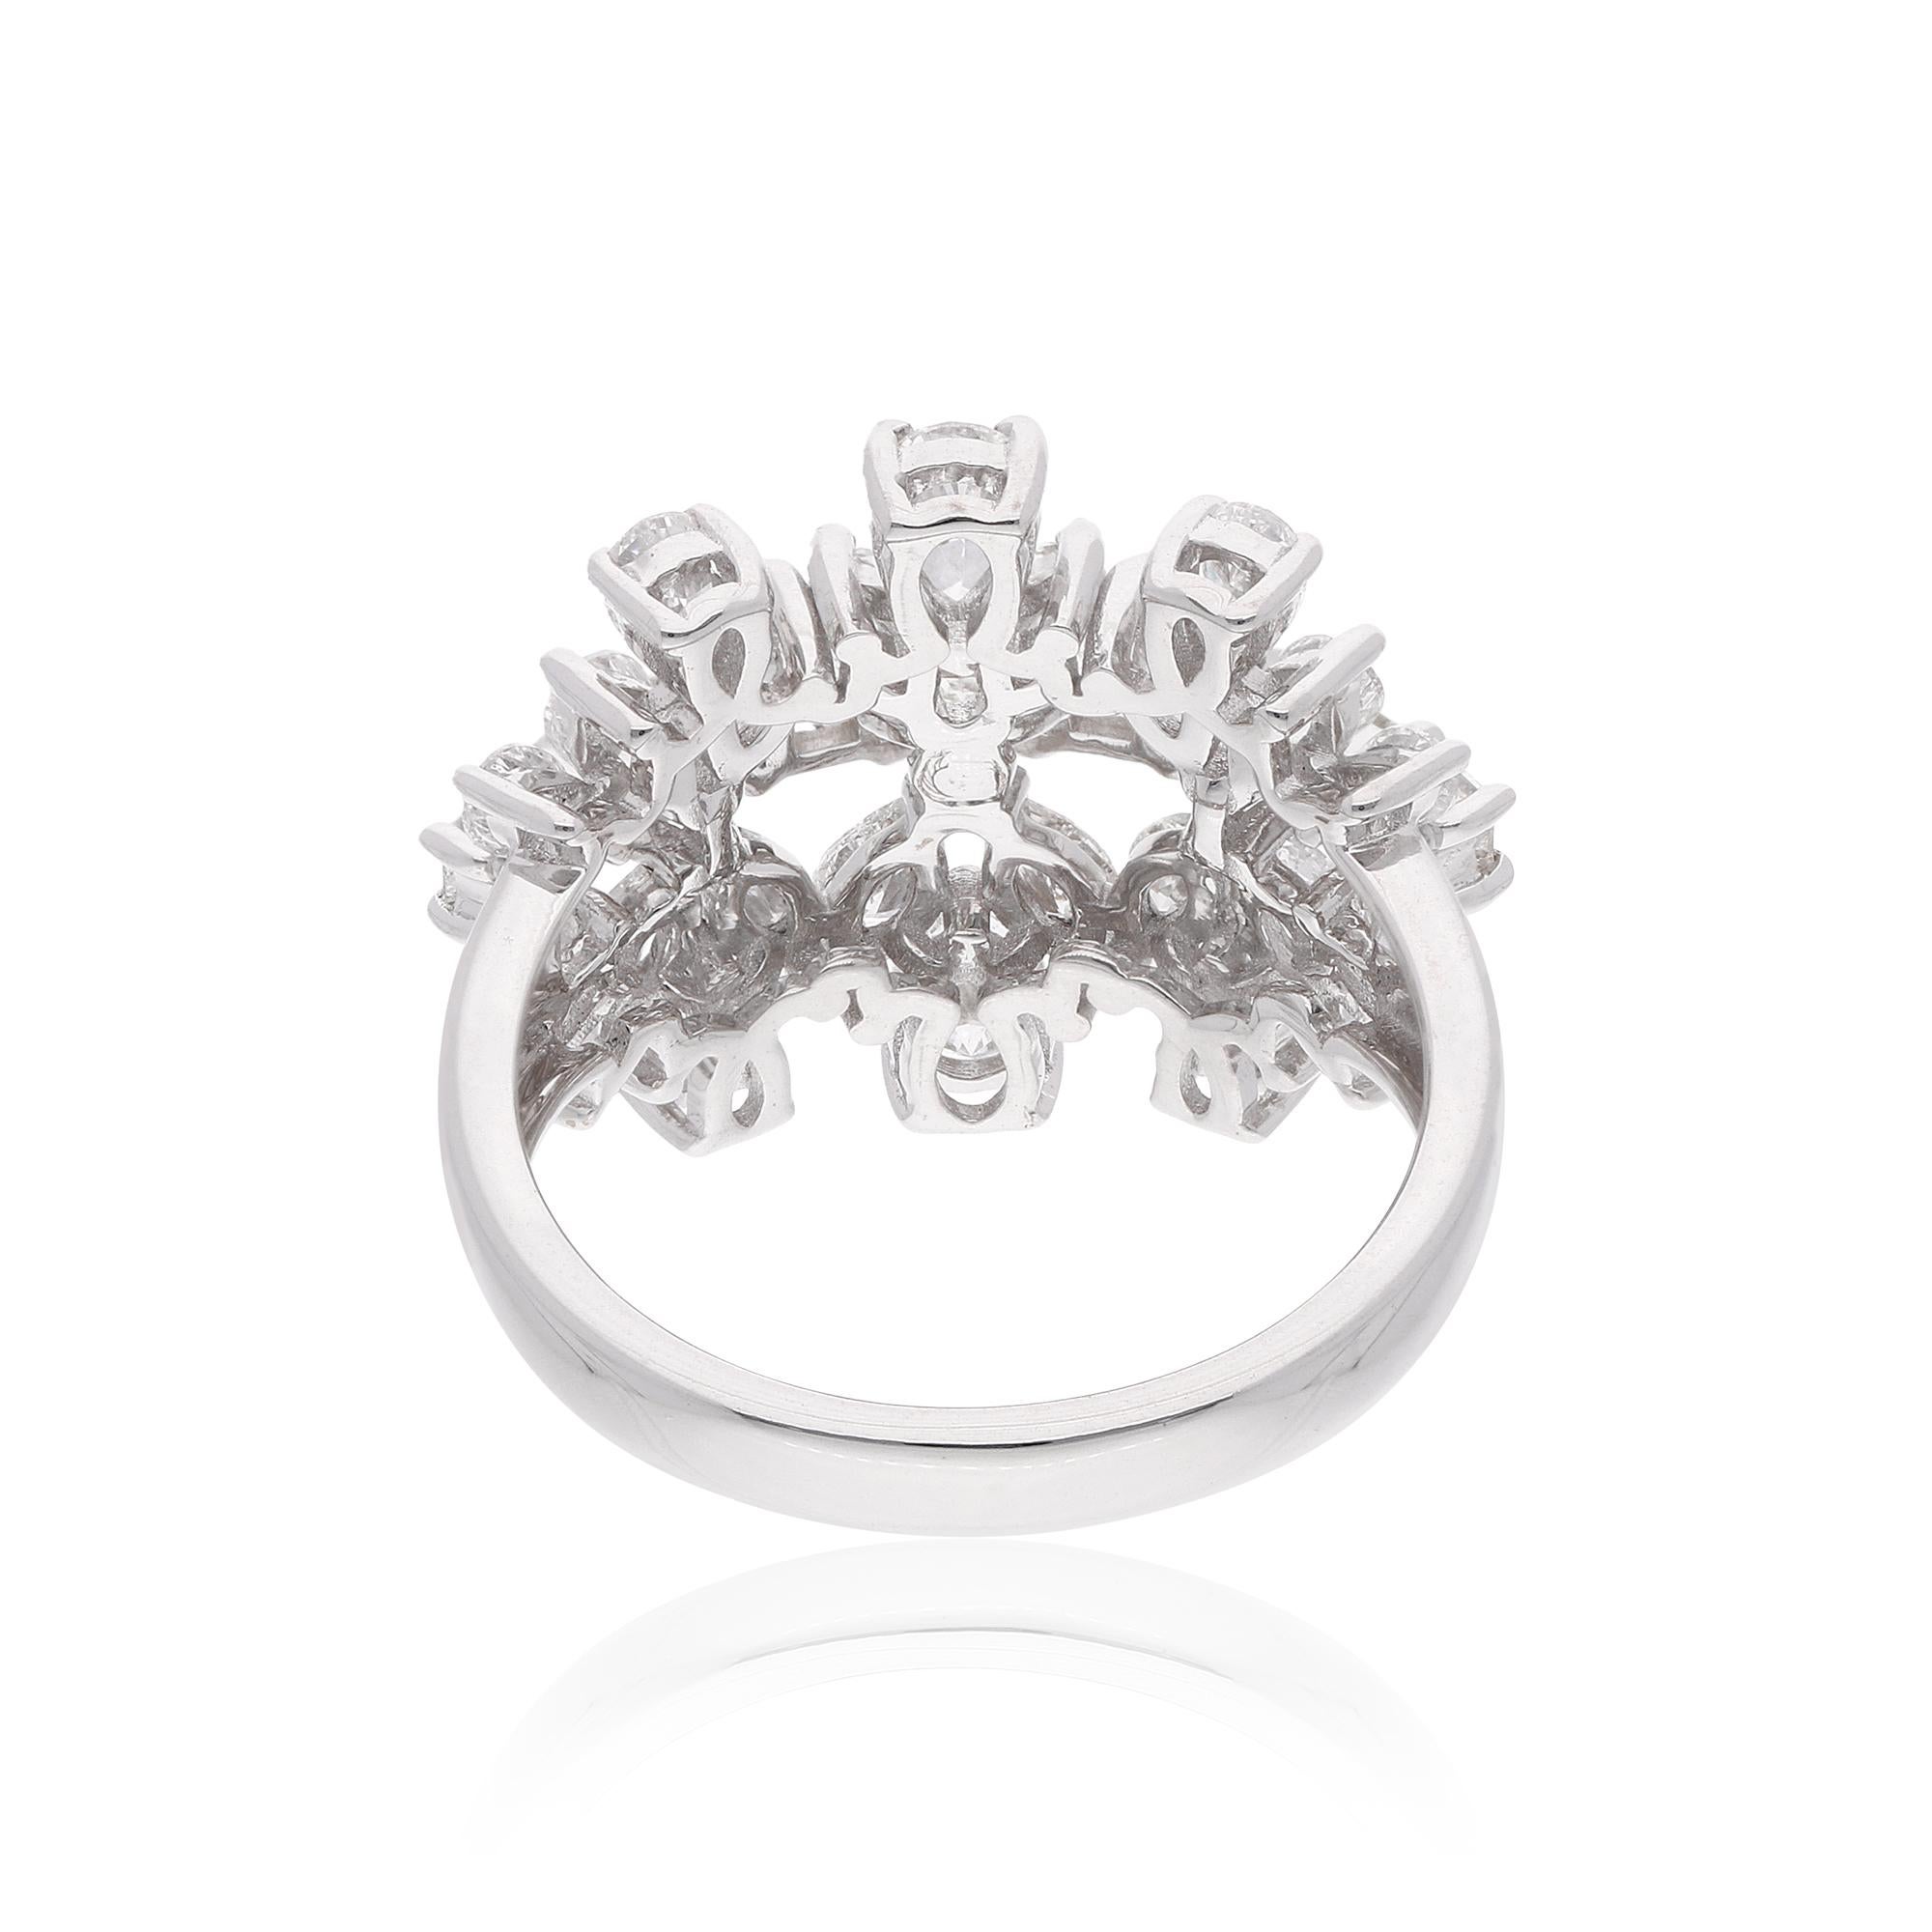 2.45 Carat SI/HI Princess Cut Diamond Cocktail Ring 14 Karat White Gold Jewelry For Sale 1